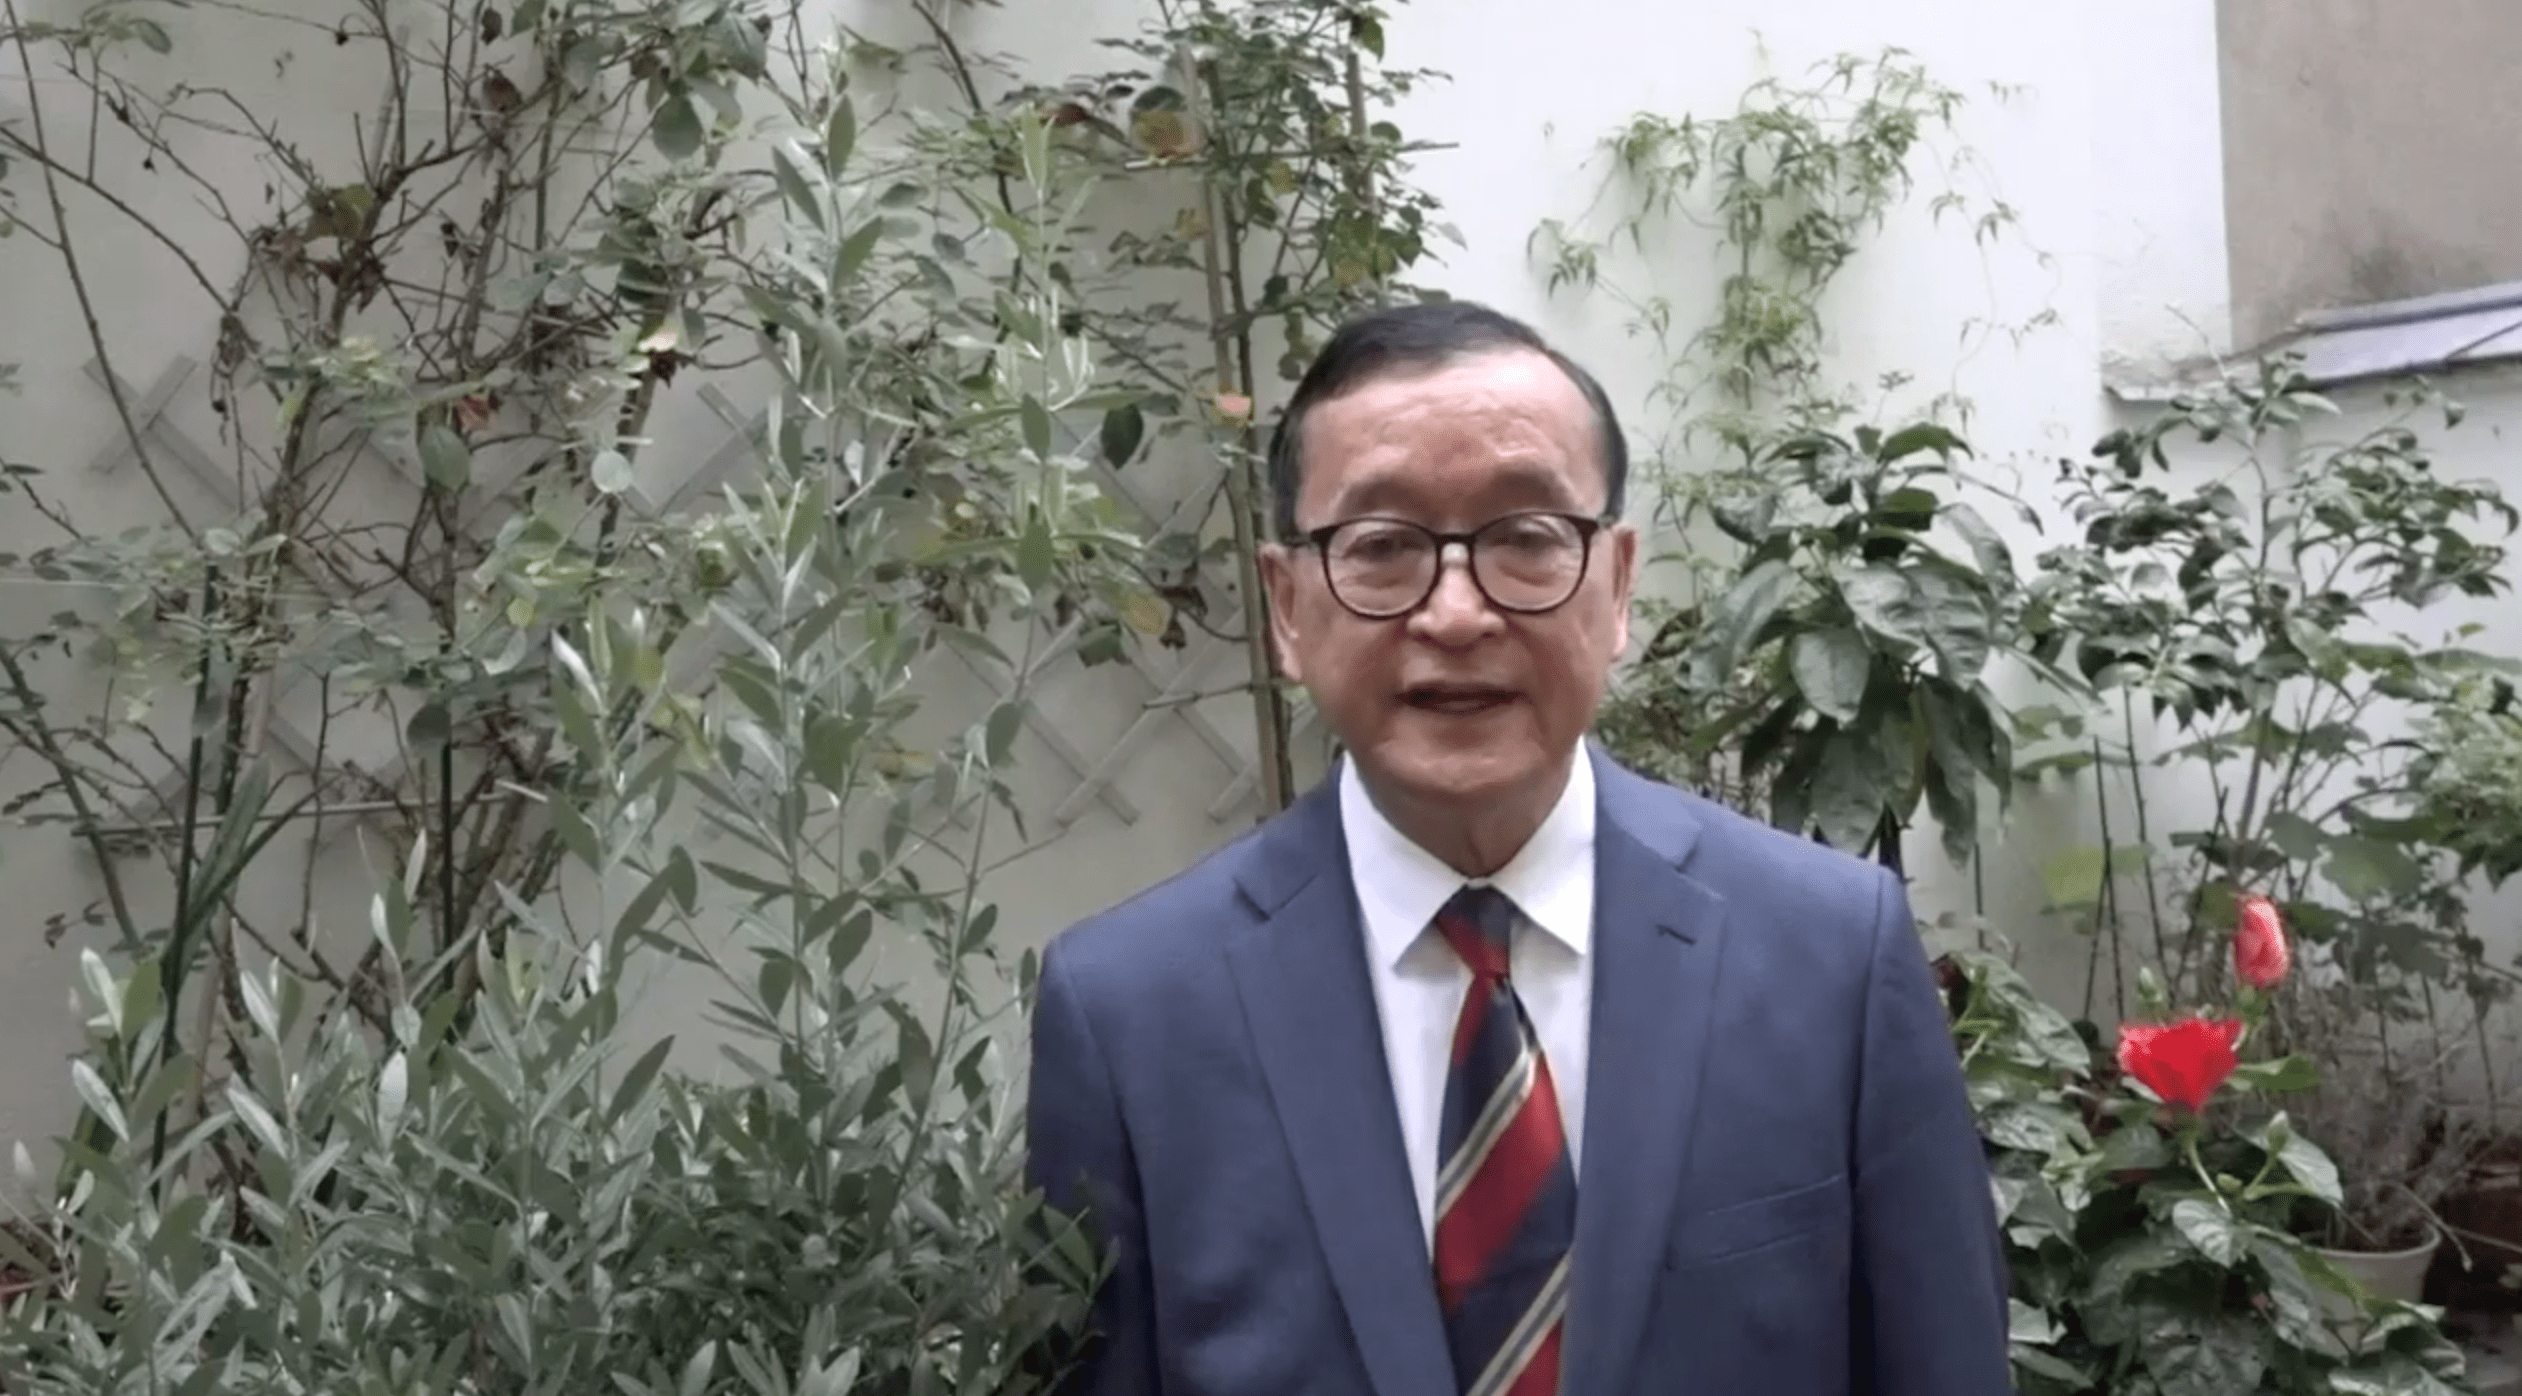 Sam Rainsy’s appeal to the international community